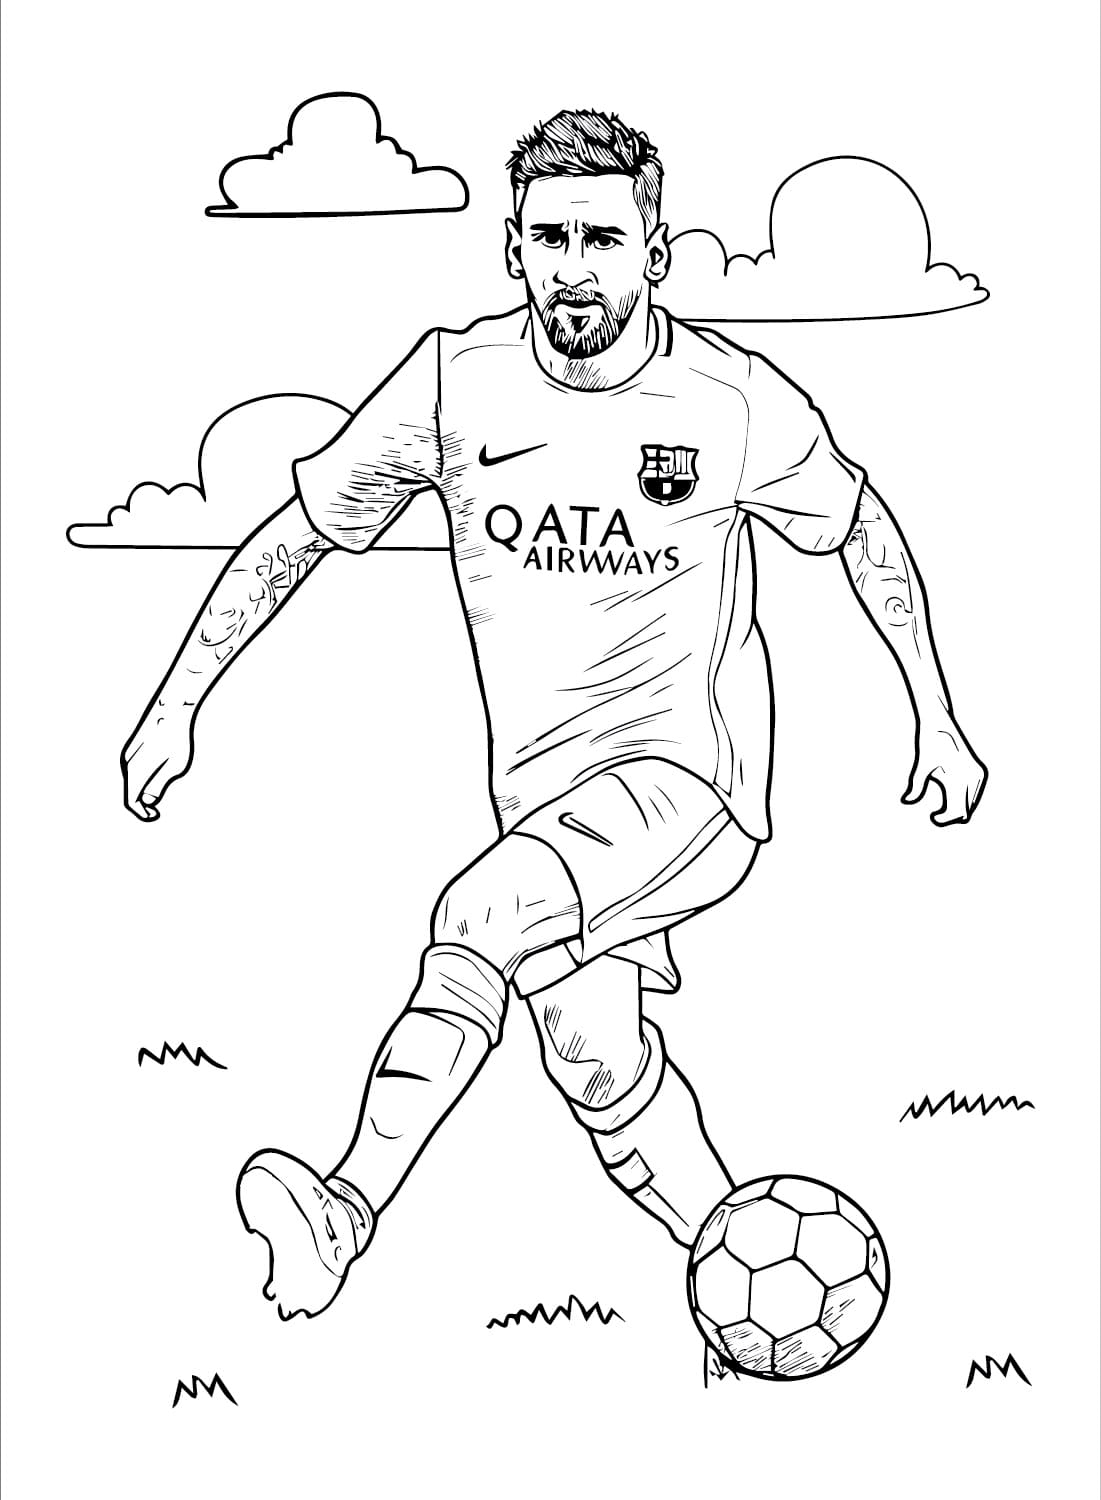 Lionel Messi coloring pages - ColoringLib